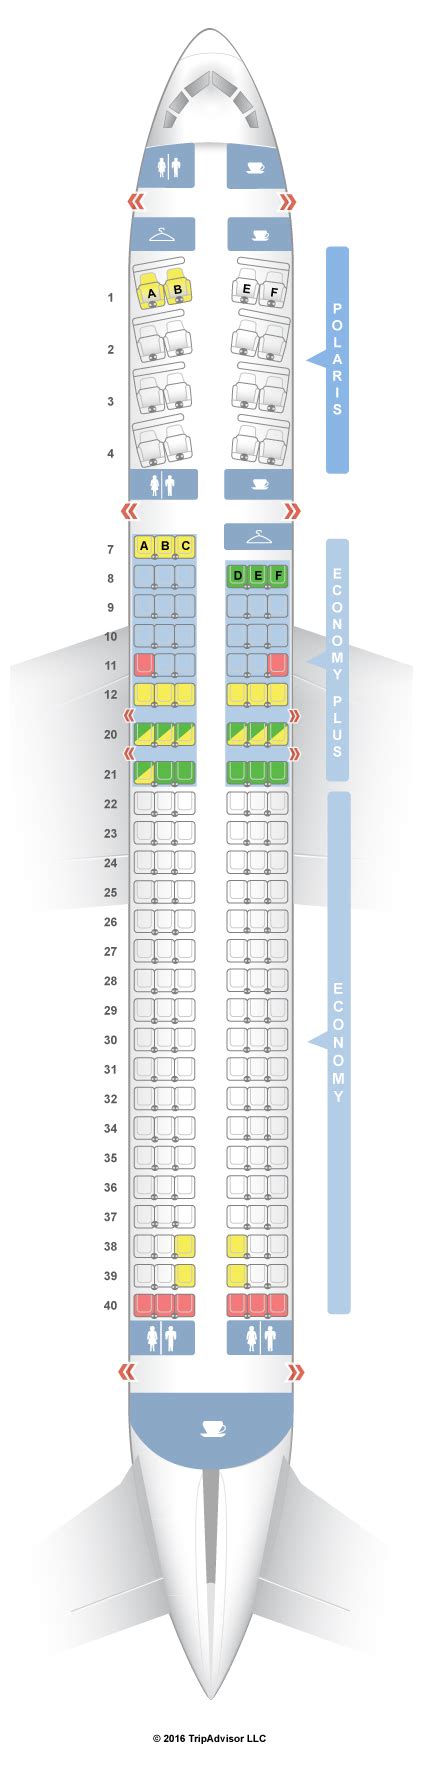 united 757 seating chart